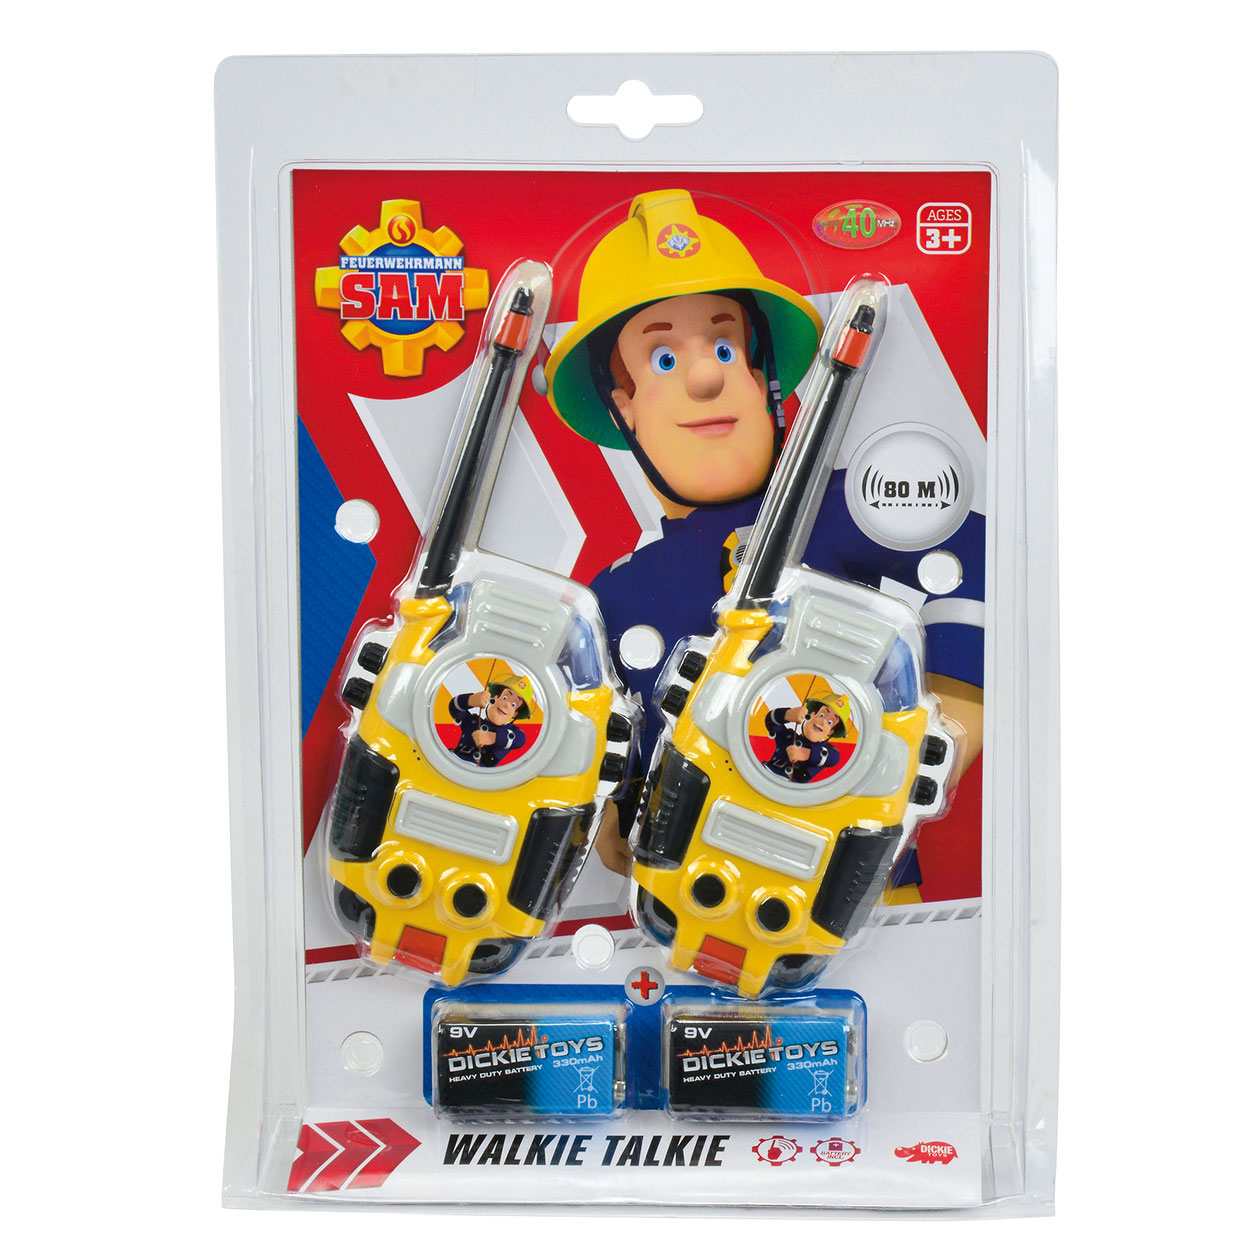 Walkie | Thimble Toys Talkie Sam Firefighter